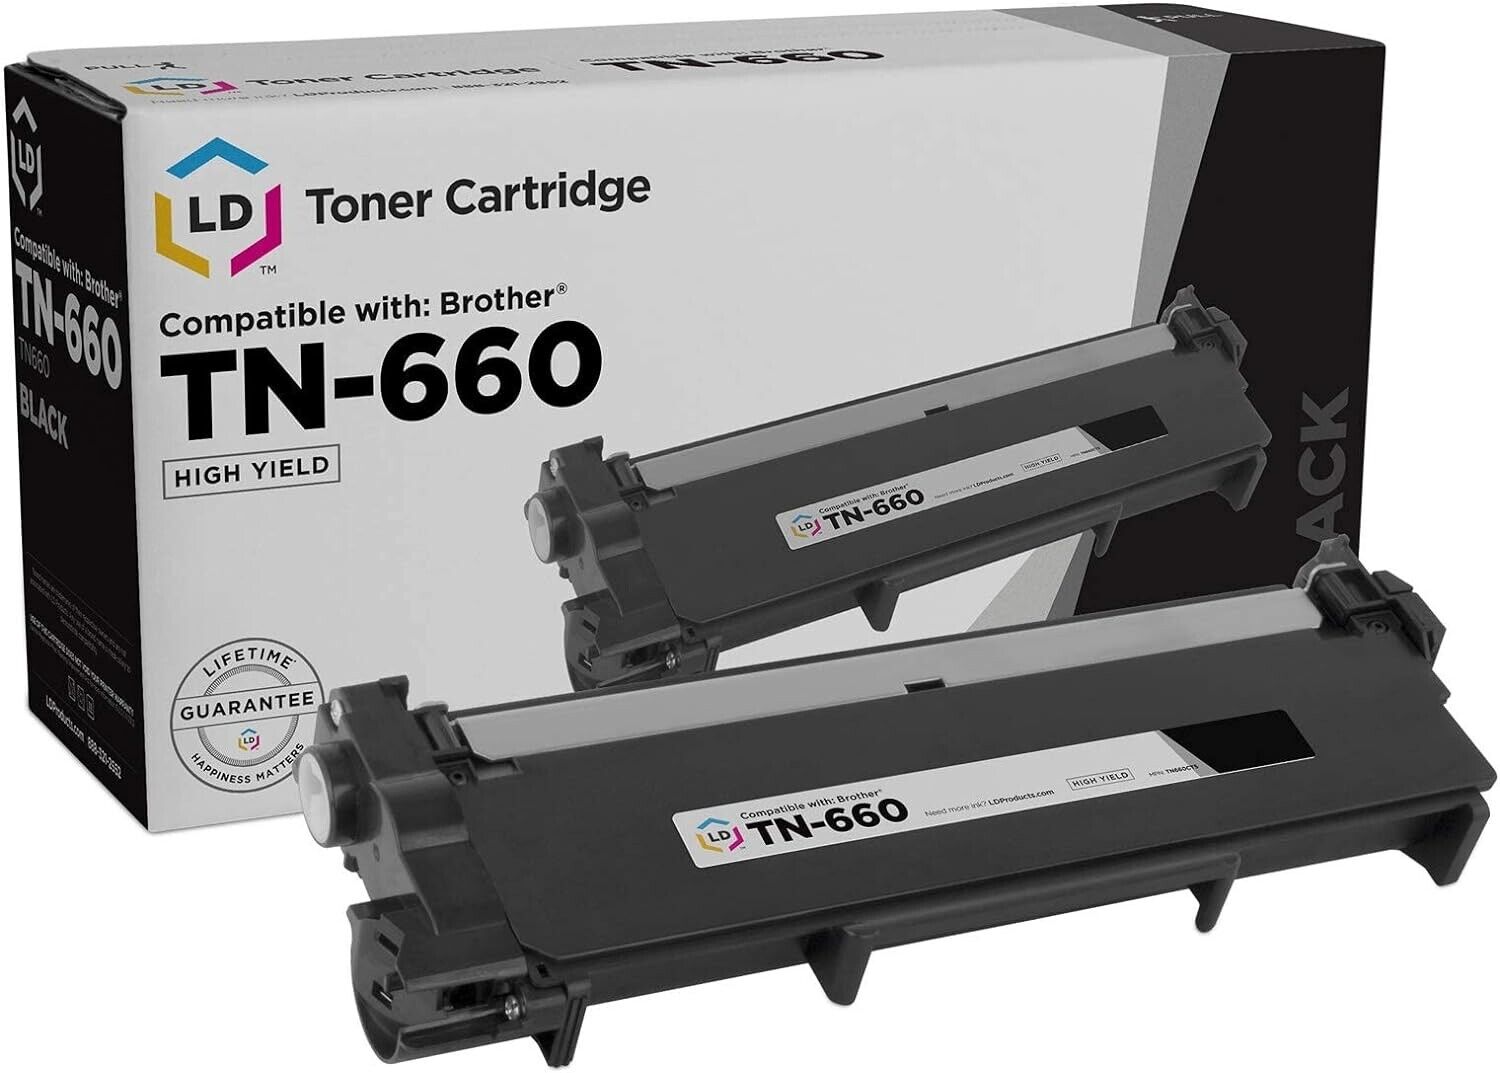 LD TN660 High Yield Black Laser Toner Cartridge for Brother Printer Models